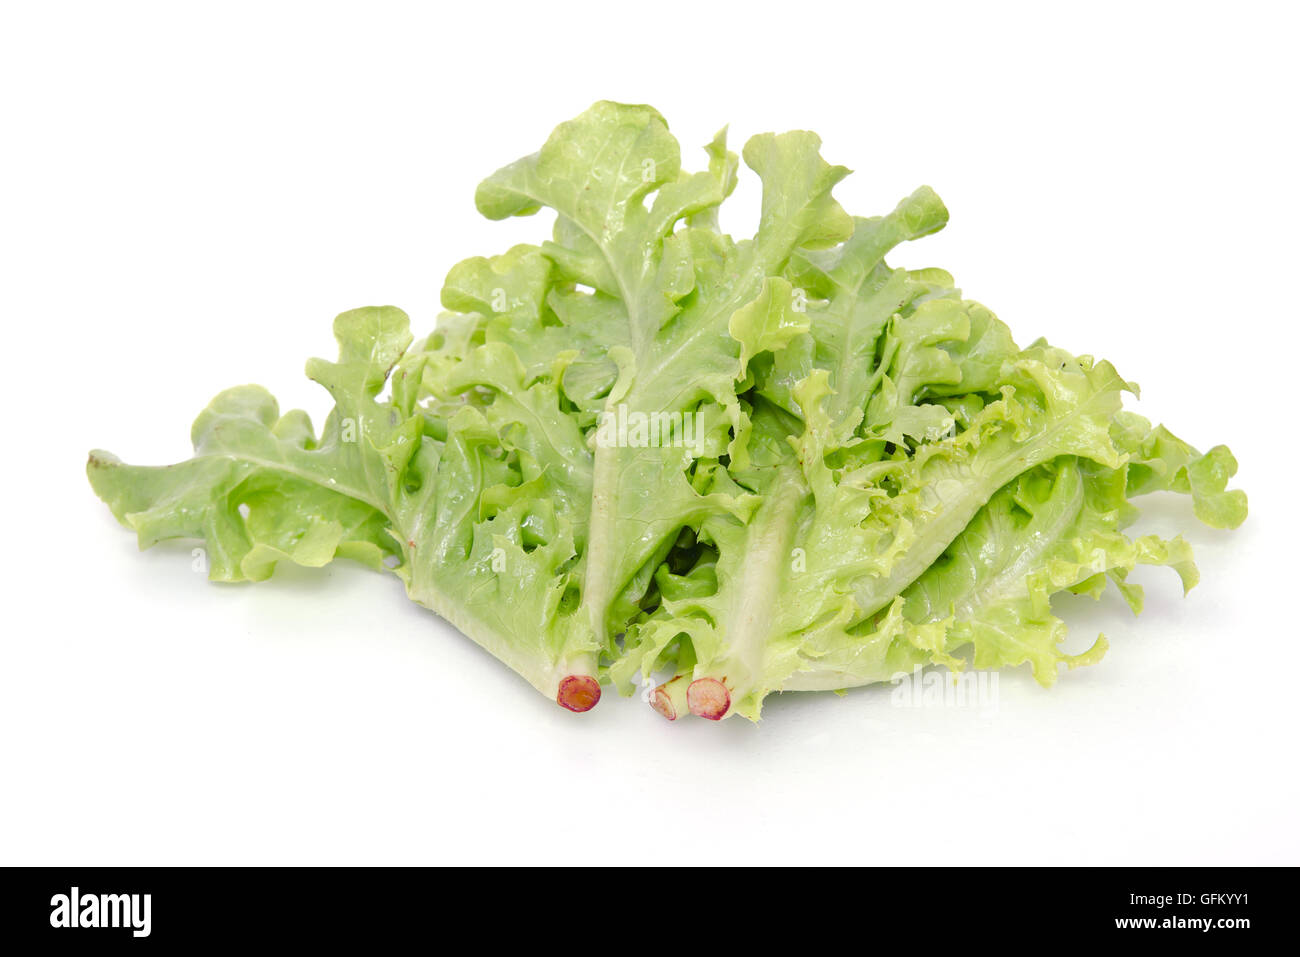 Salad vegetable leaf (Green oak and Batavia) isolated on white background Stock Photo